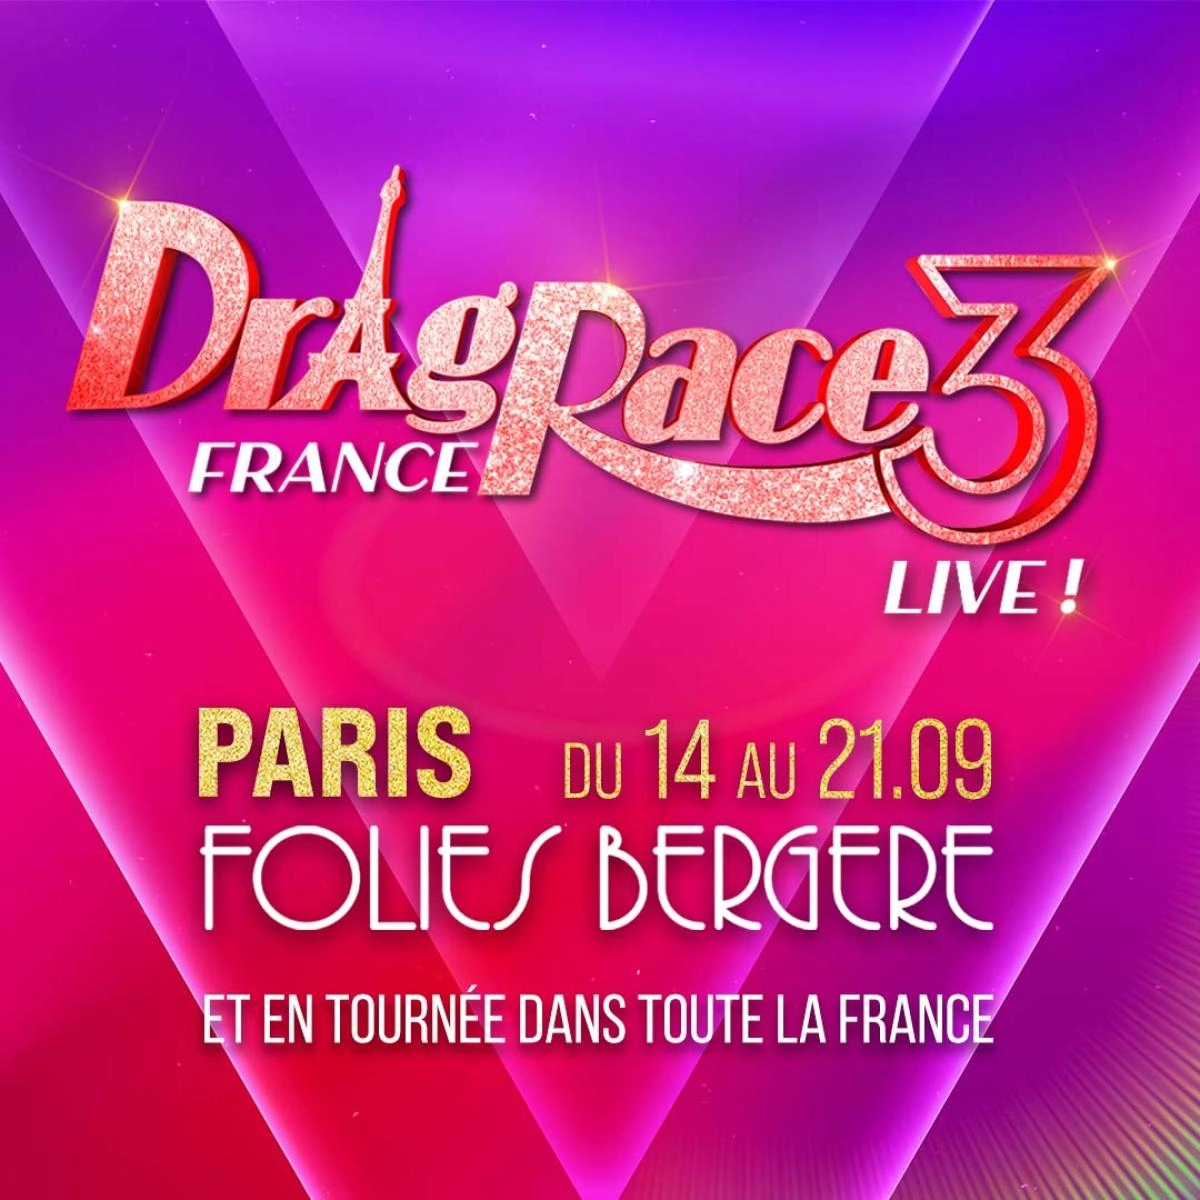 Drag Race France in der Folies Bergere Tickets